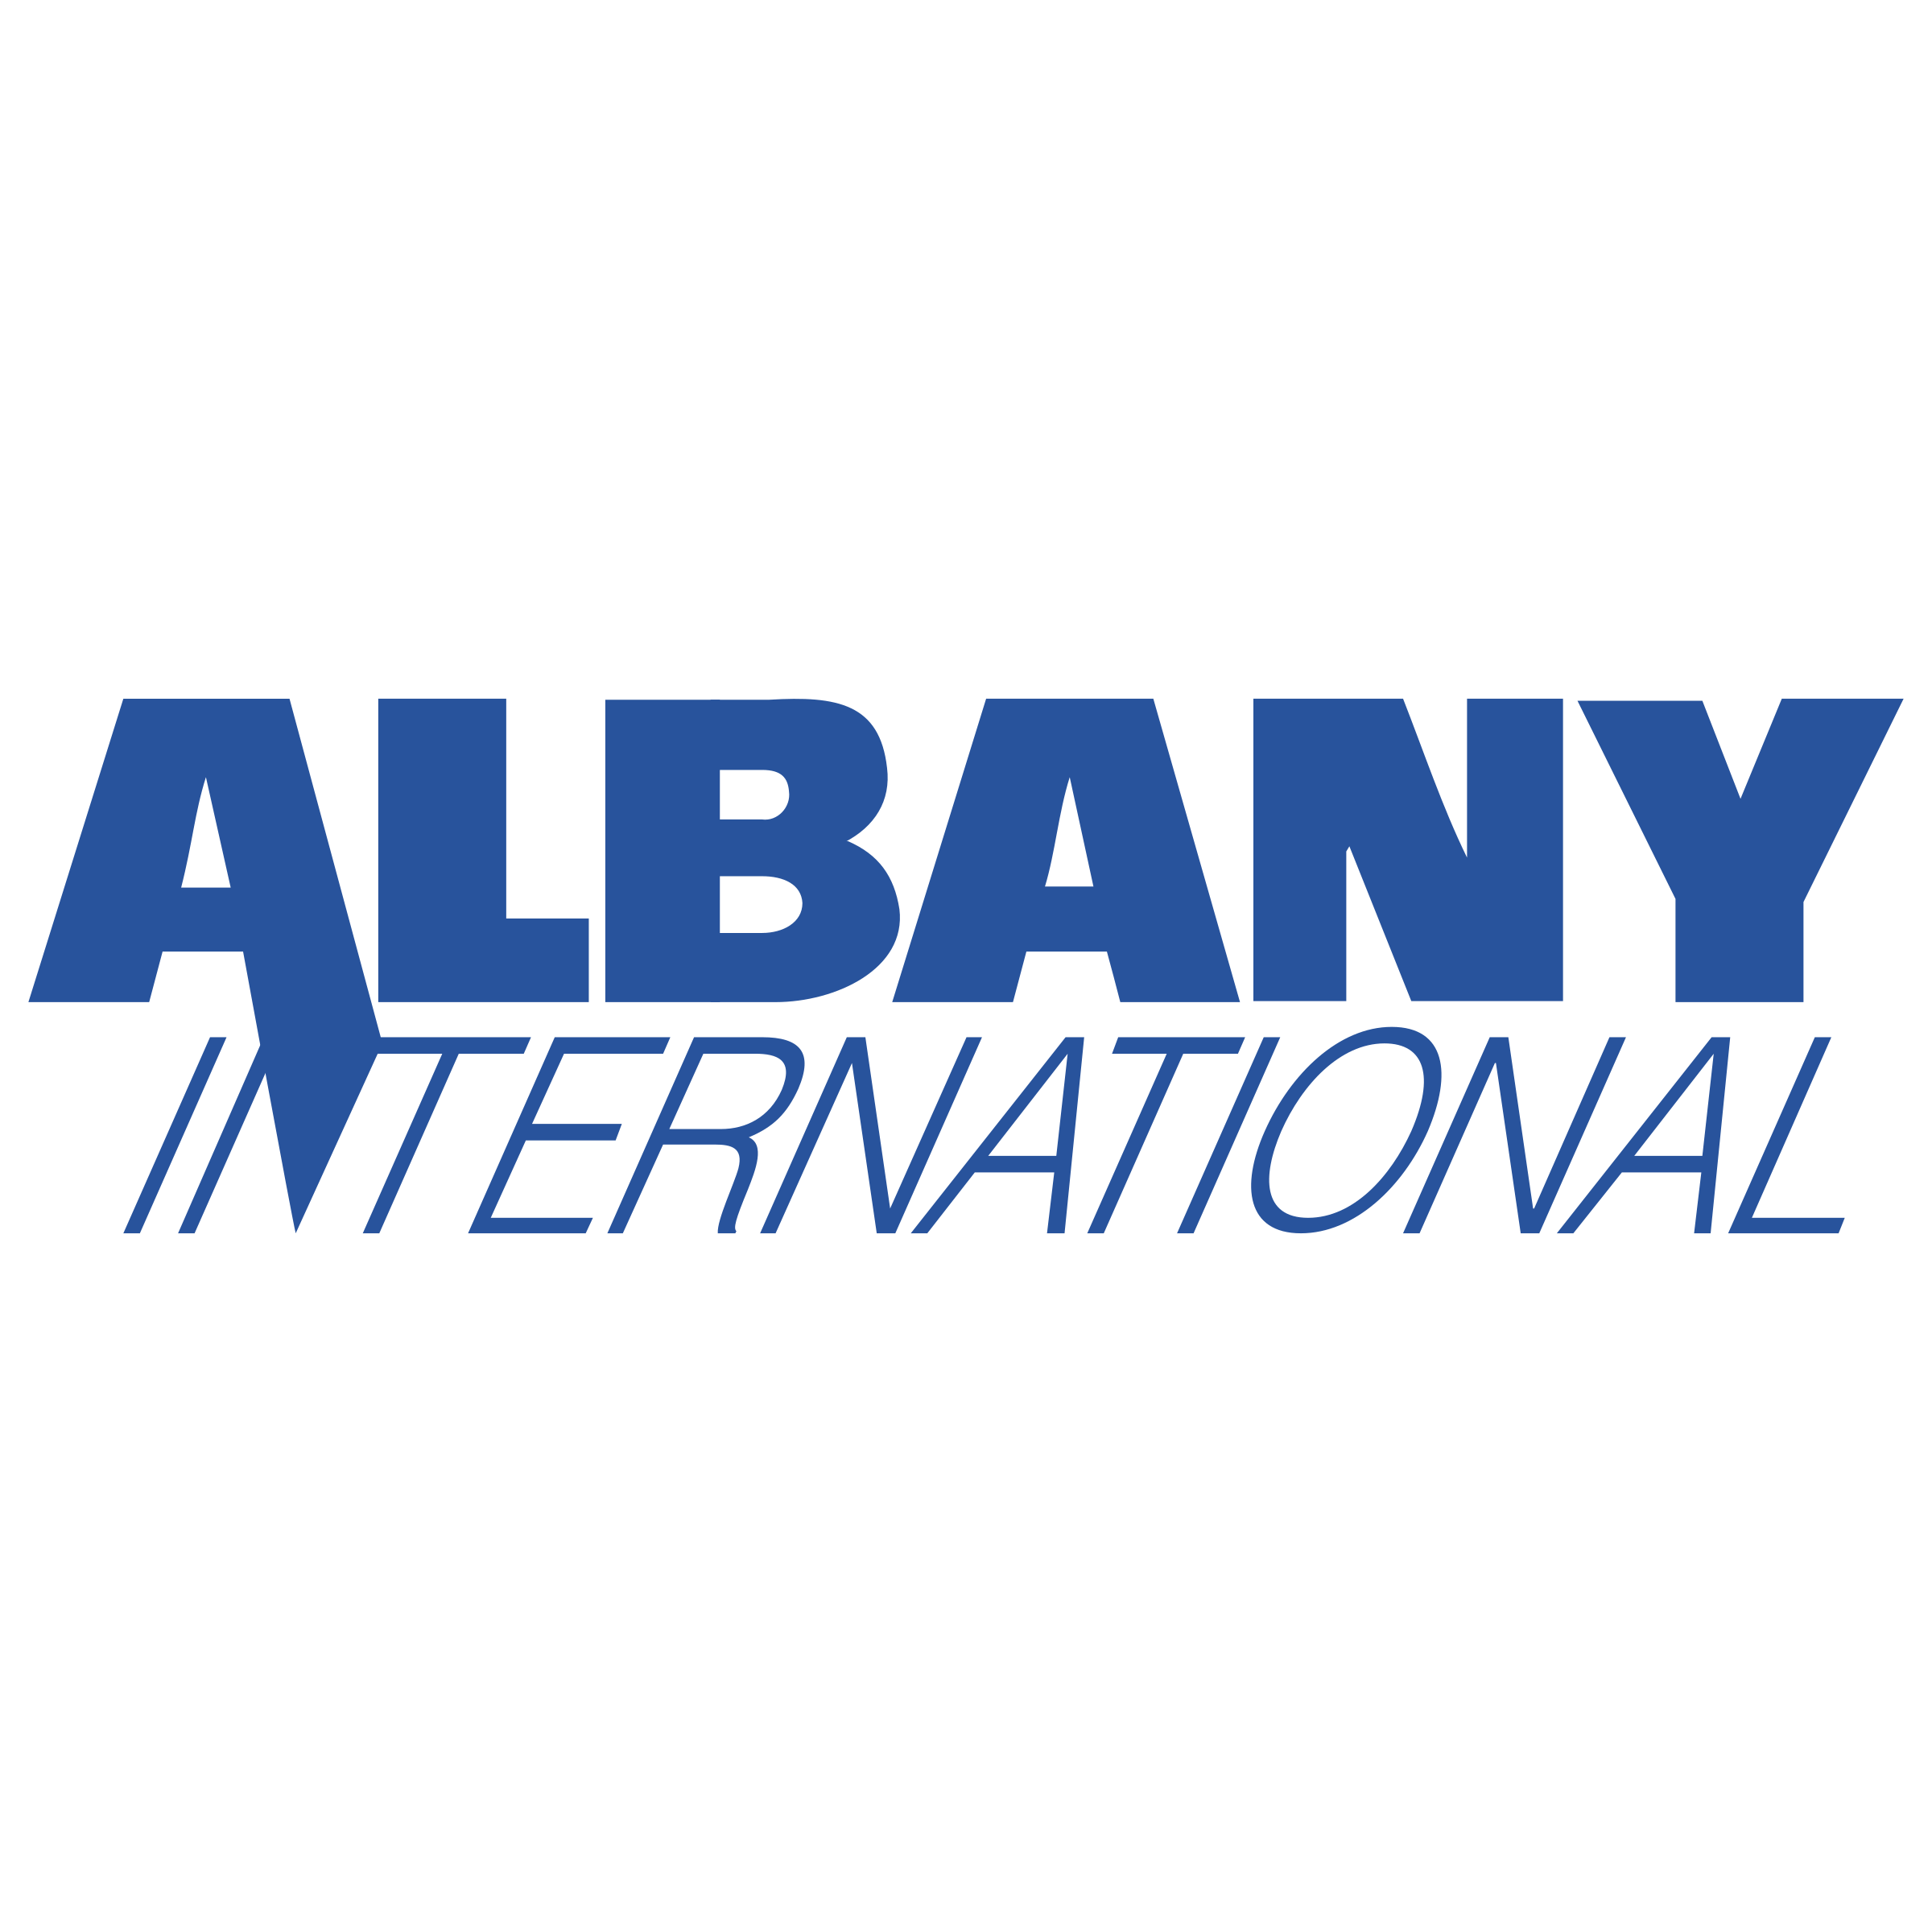 Albany Logo - Albany International Logo PNG Transparent & SVG Vector - Freebie Supply